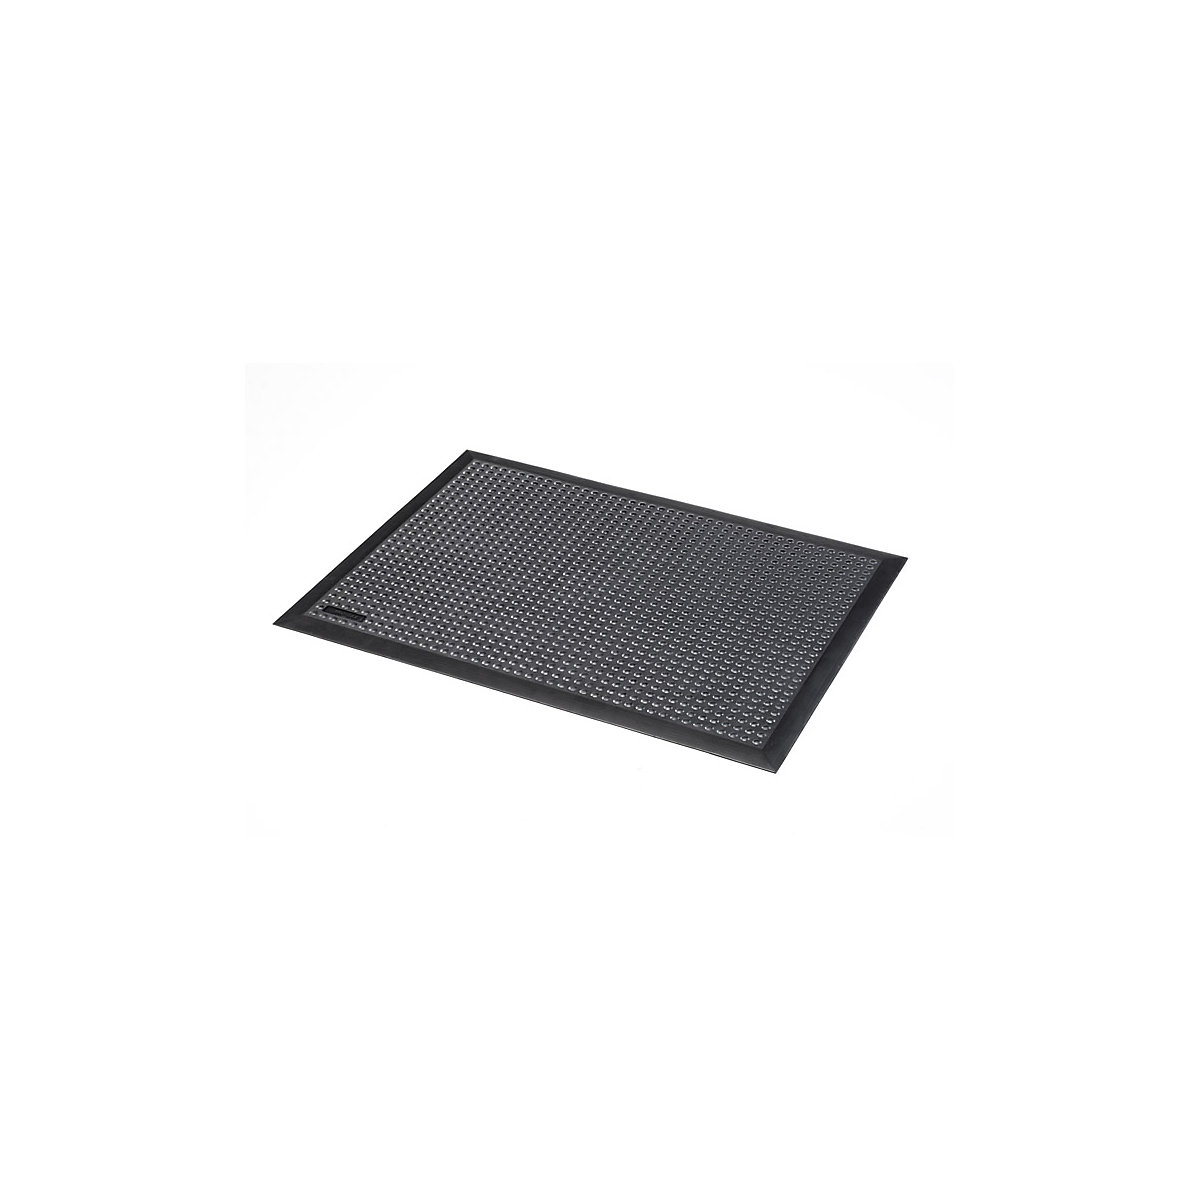 Skystep nitrile rubber workstation matting - NOTRAX